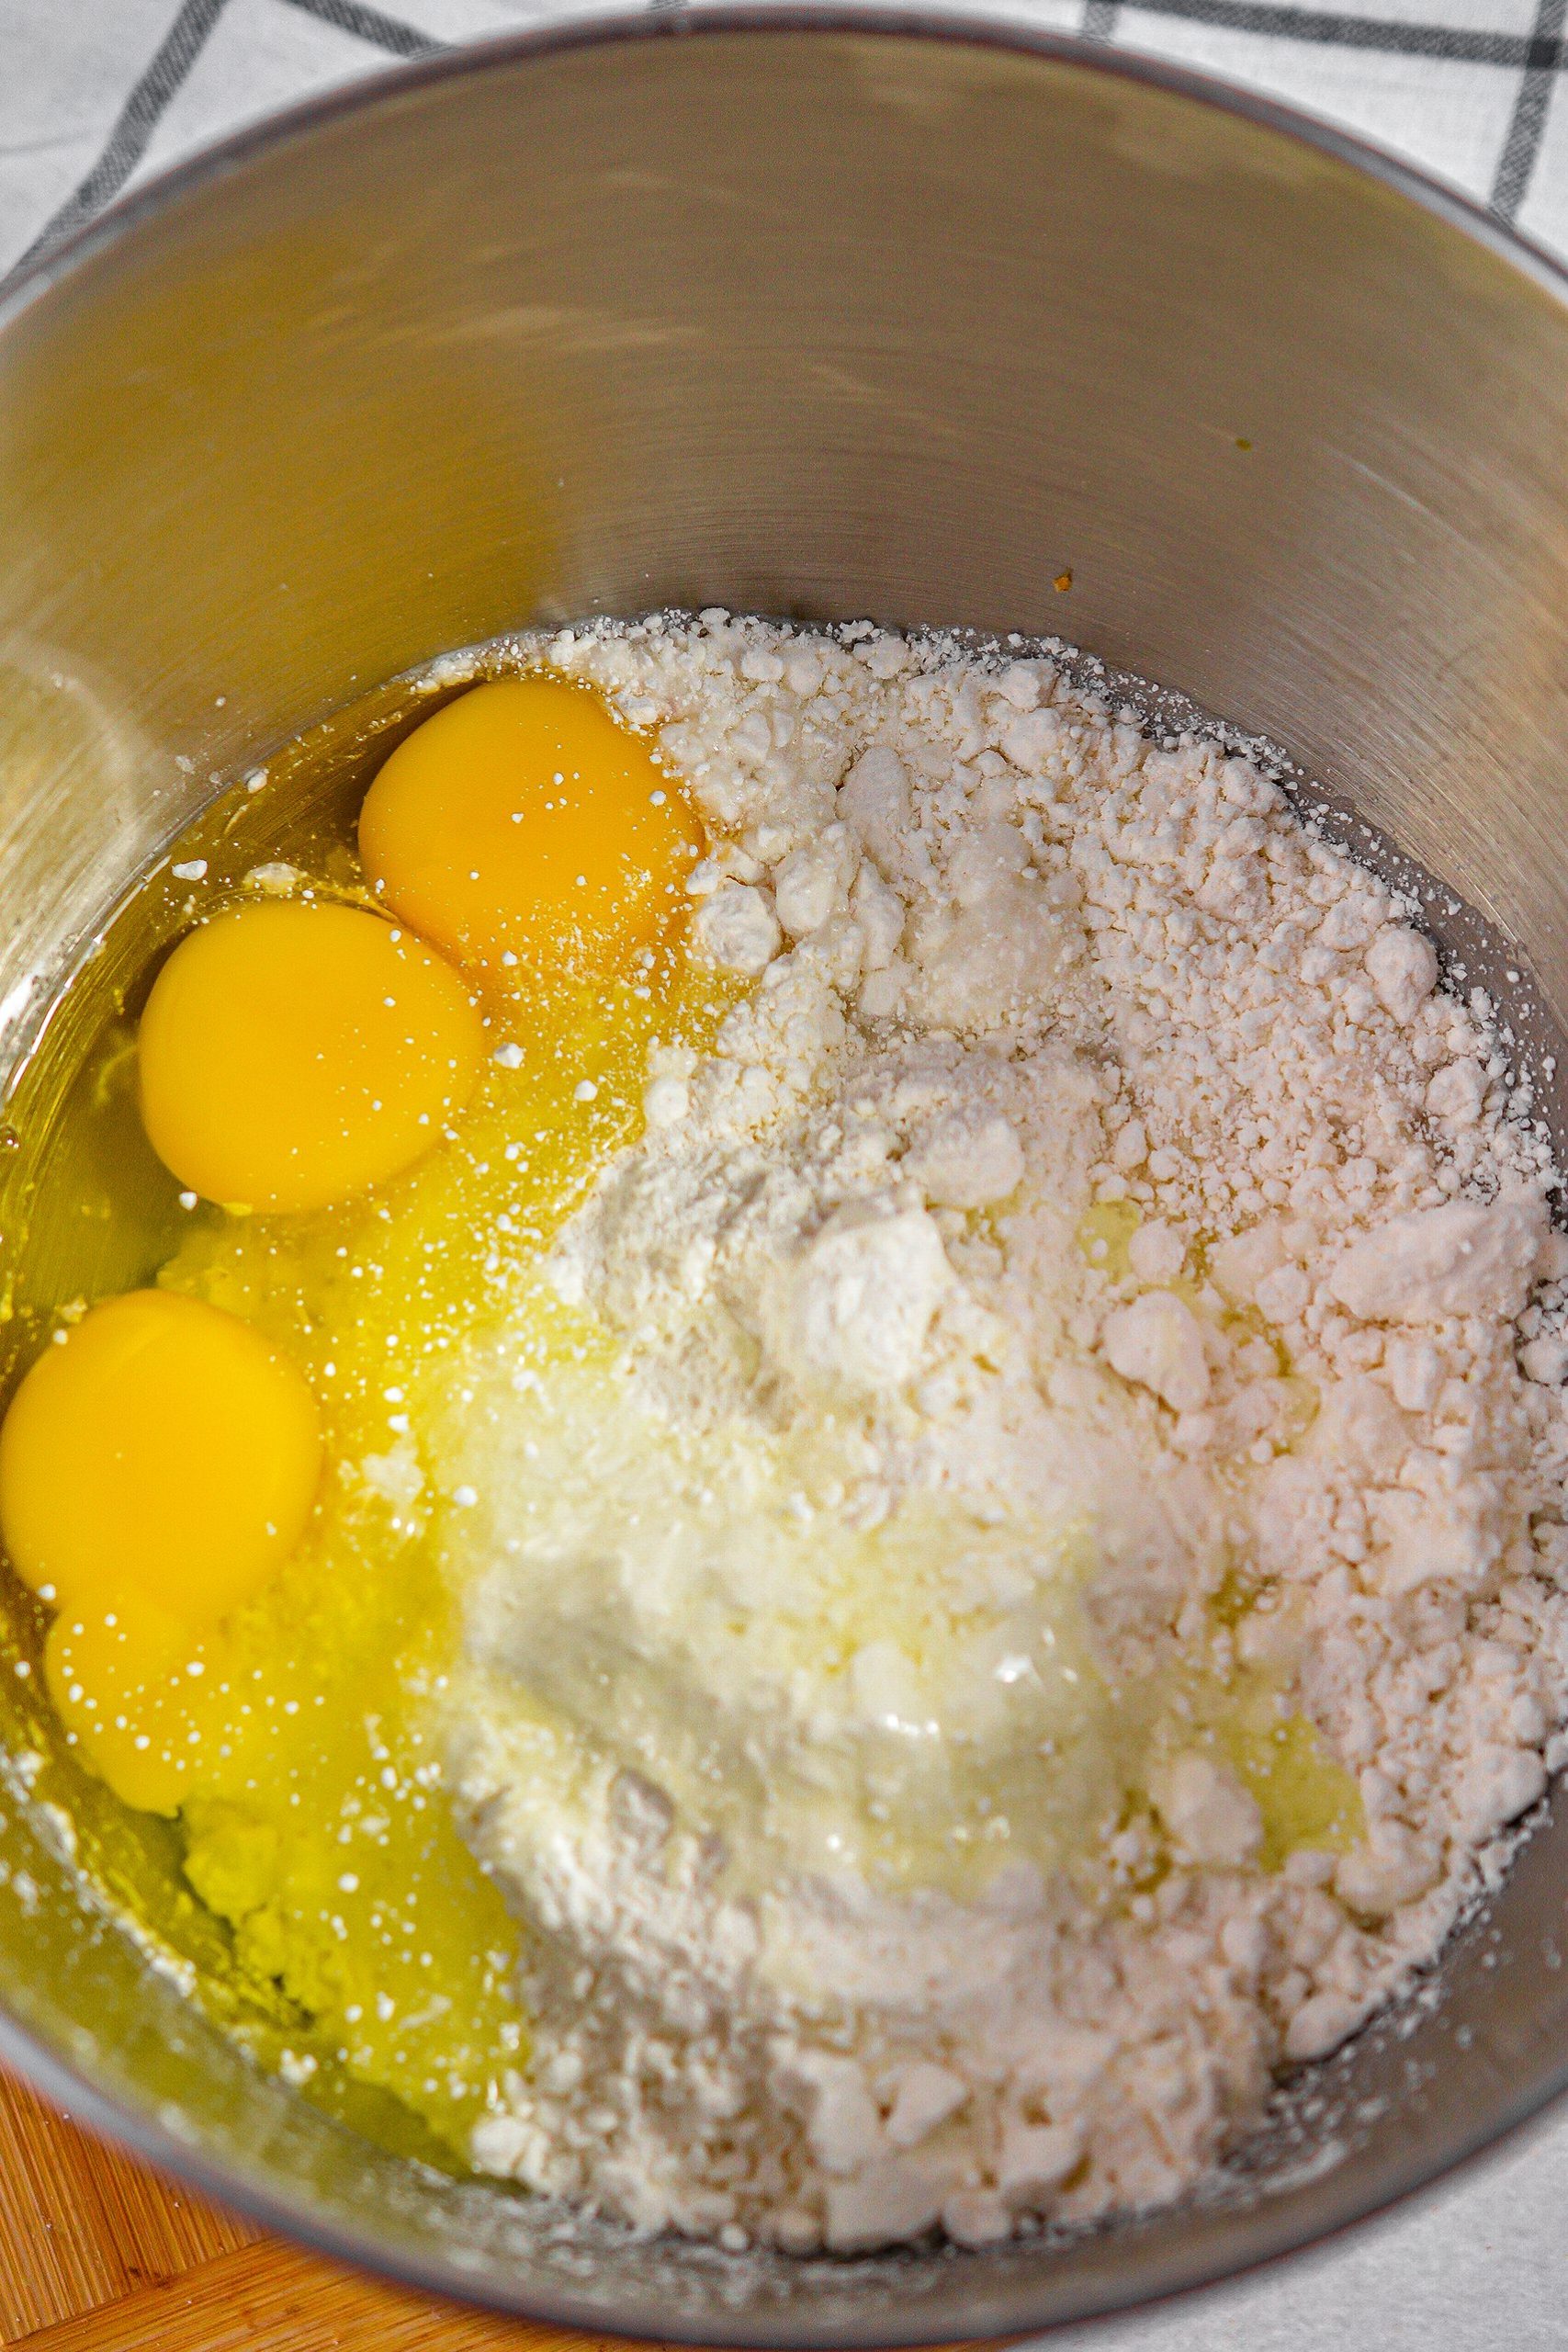 Adding the eggs.